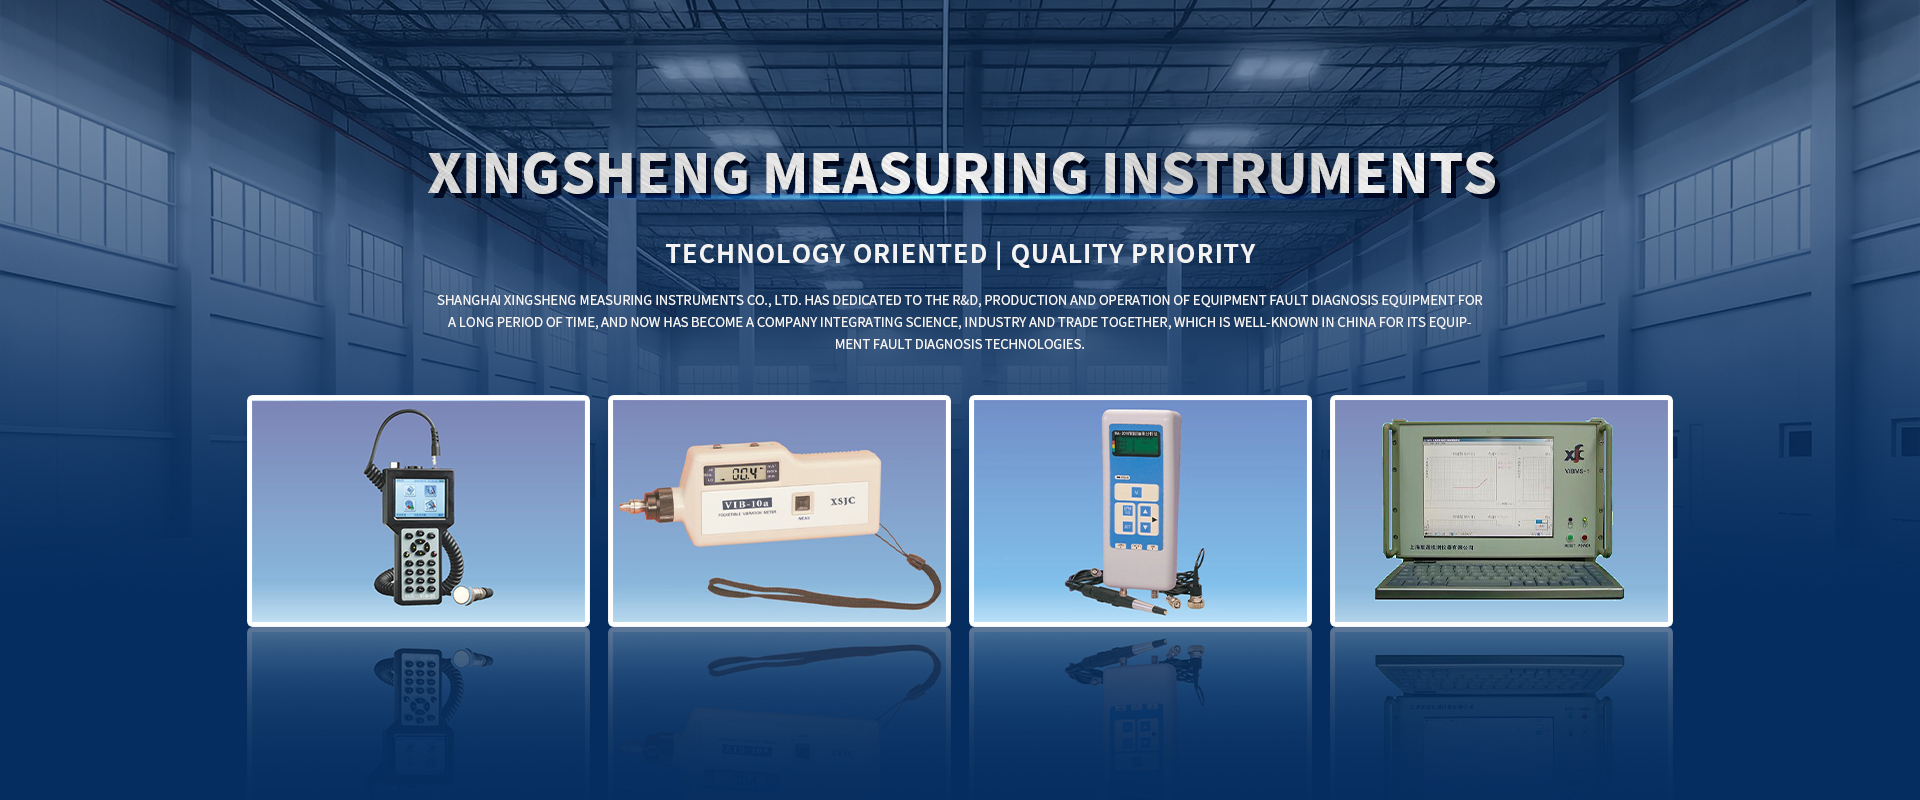 Shanghai Xingsheng Measuring Instruments Co., Ltd.